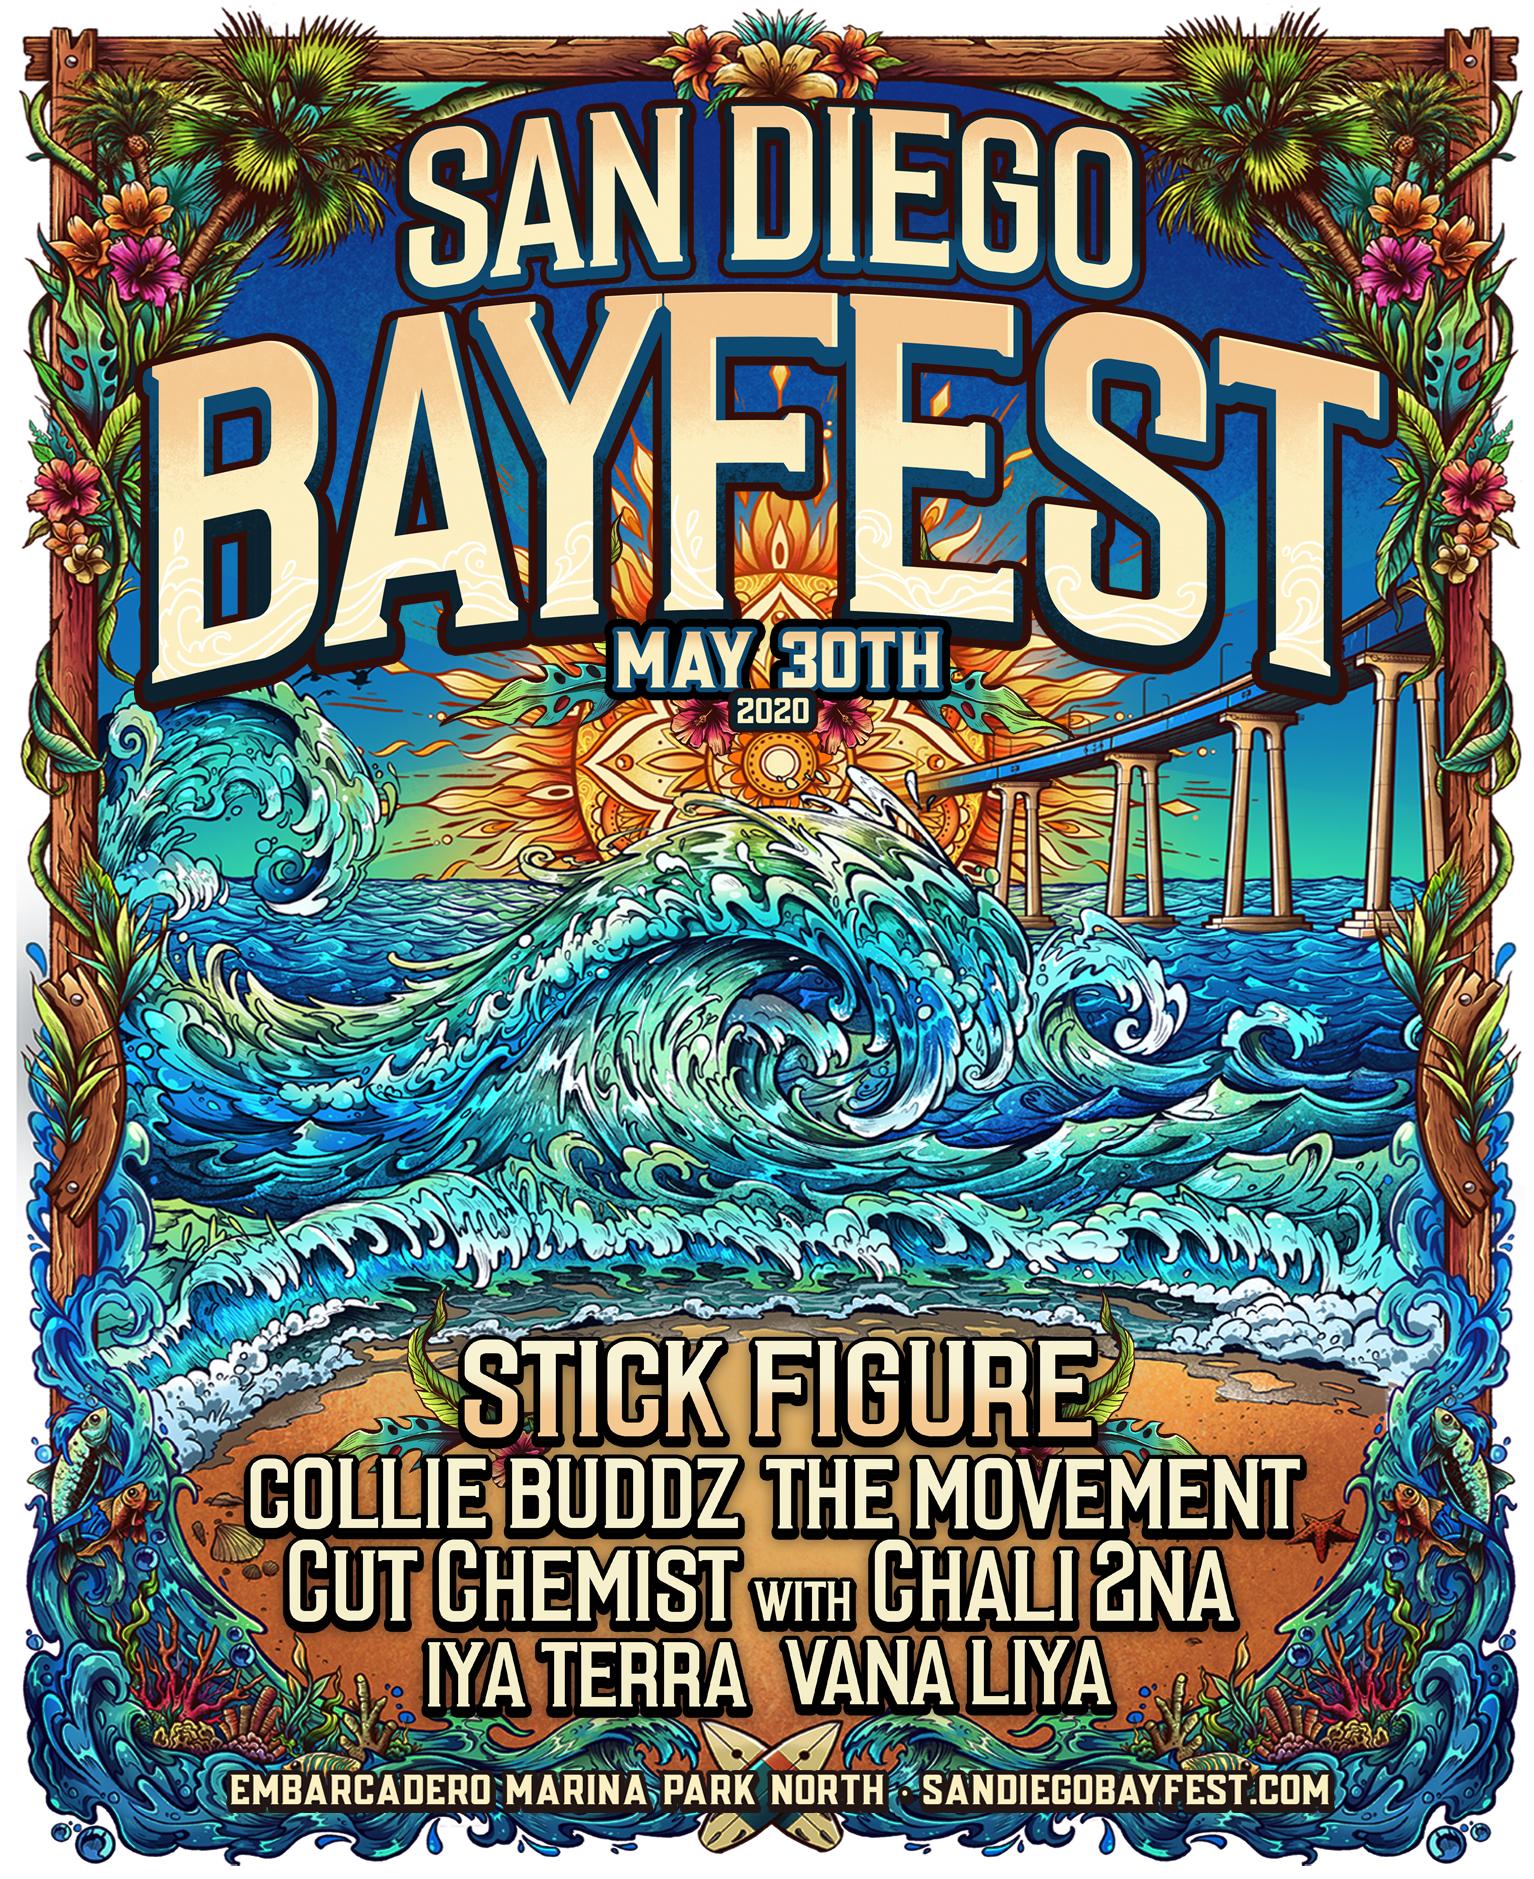 Stick Figure at San Diego Bayfest (POSTPONED - NEW DATE TBD)